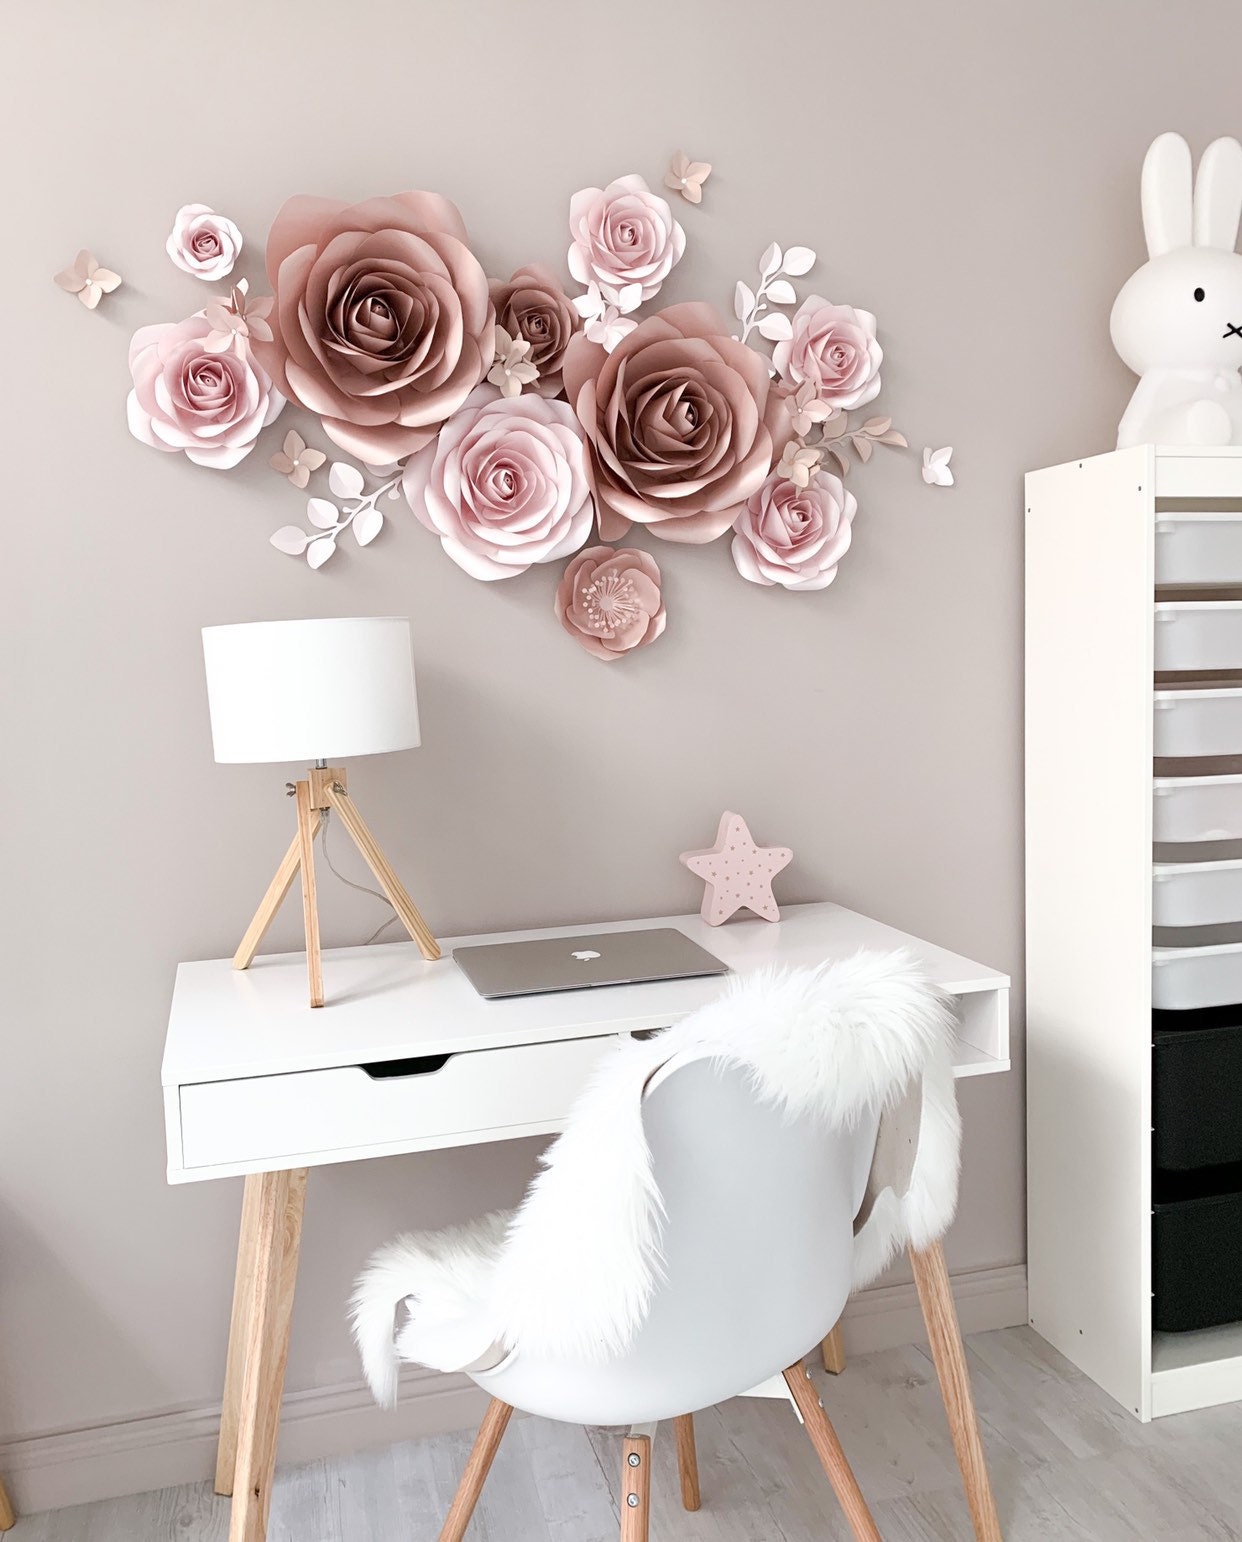 Pretty Paper Roses - Desks & Dreams